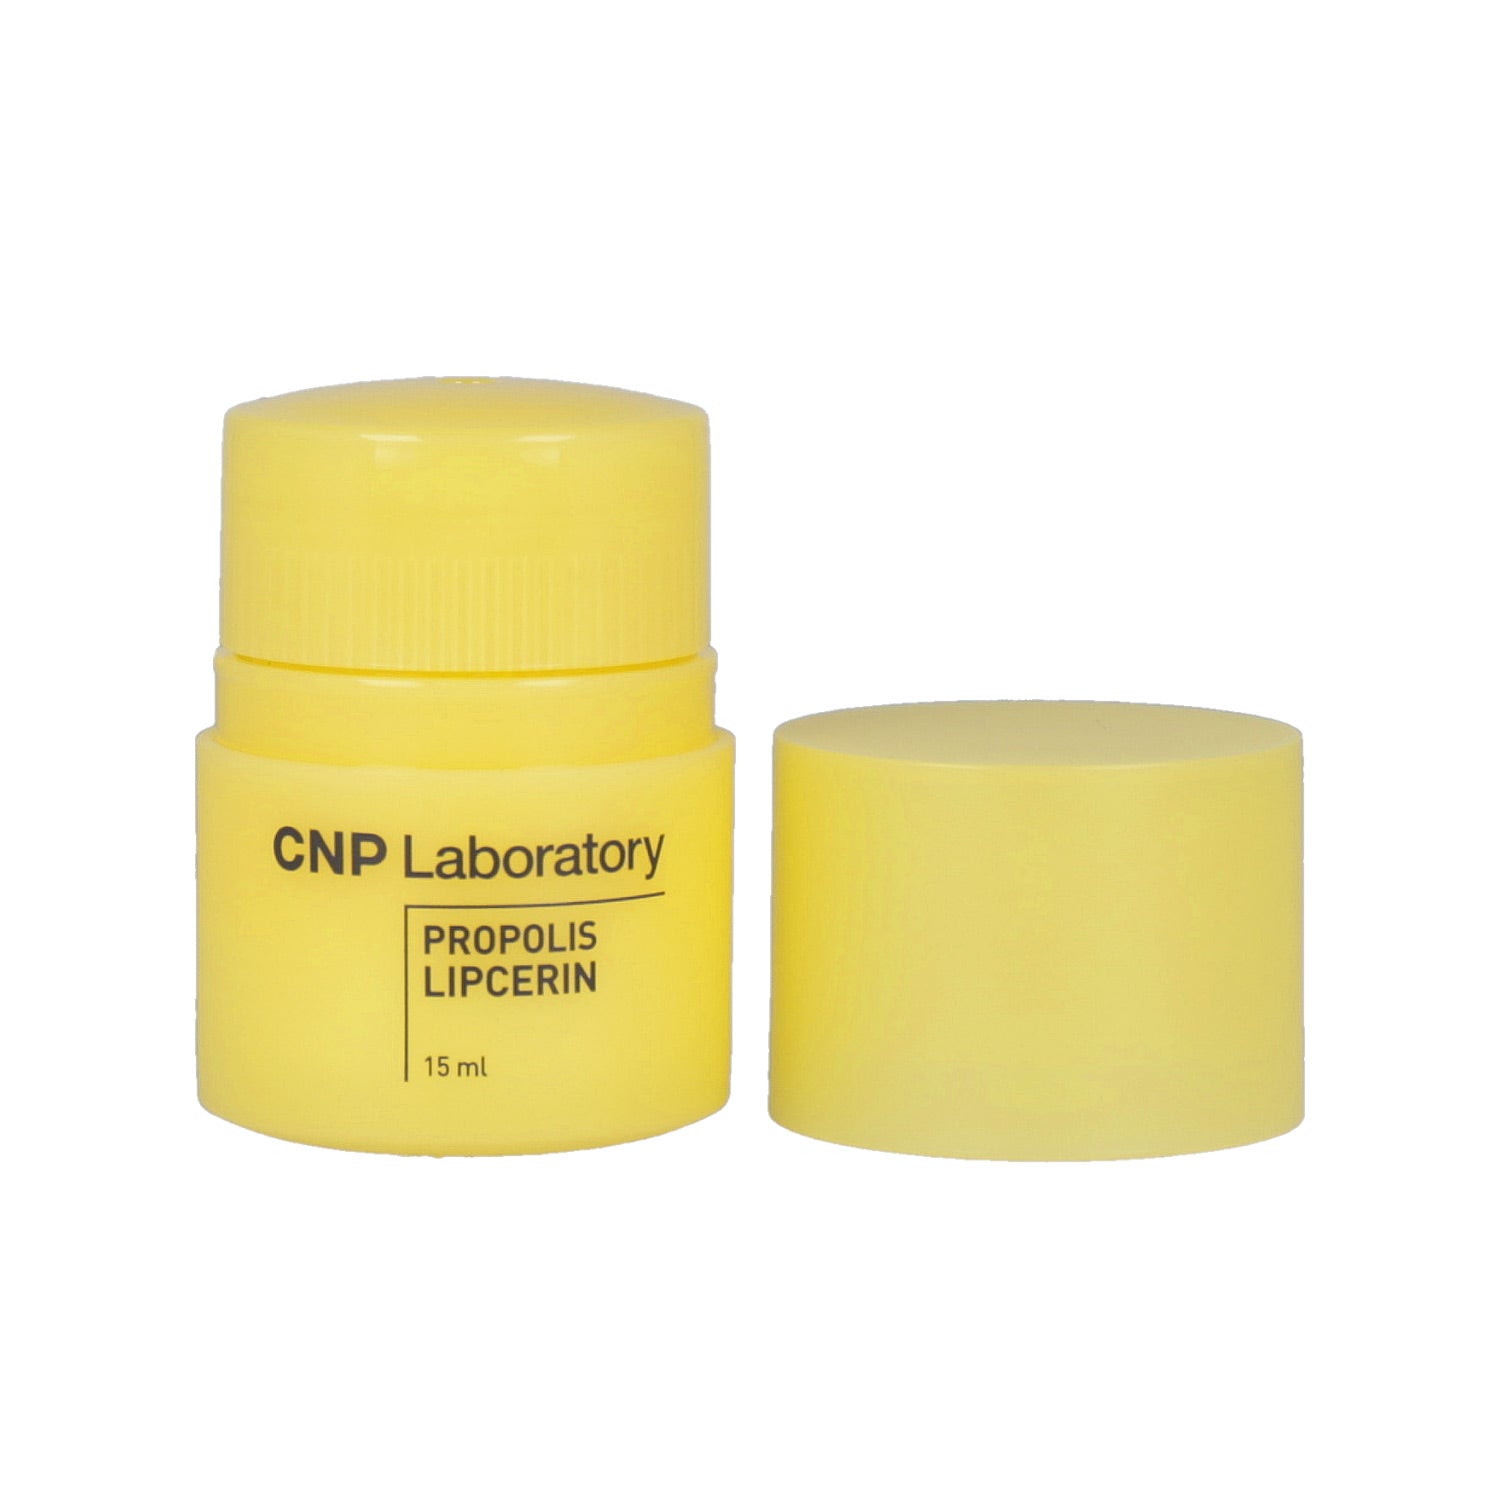 CNP Laboratory Propolis Lipcerin 15ml - DODOSKIN